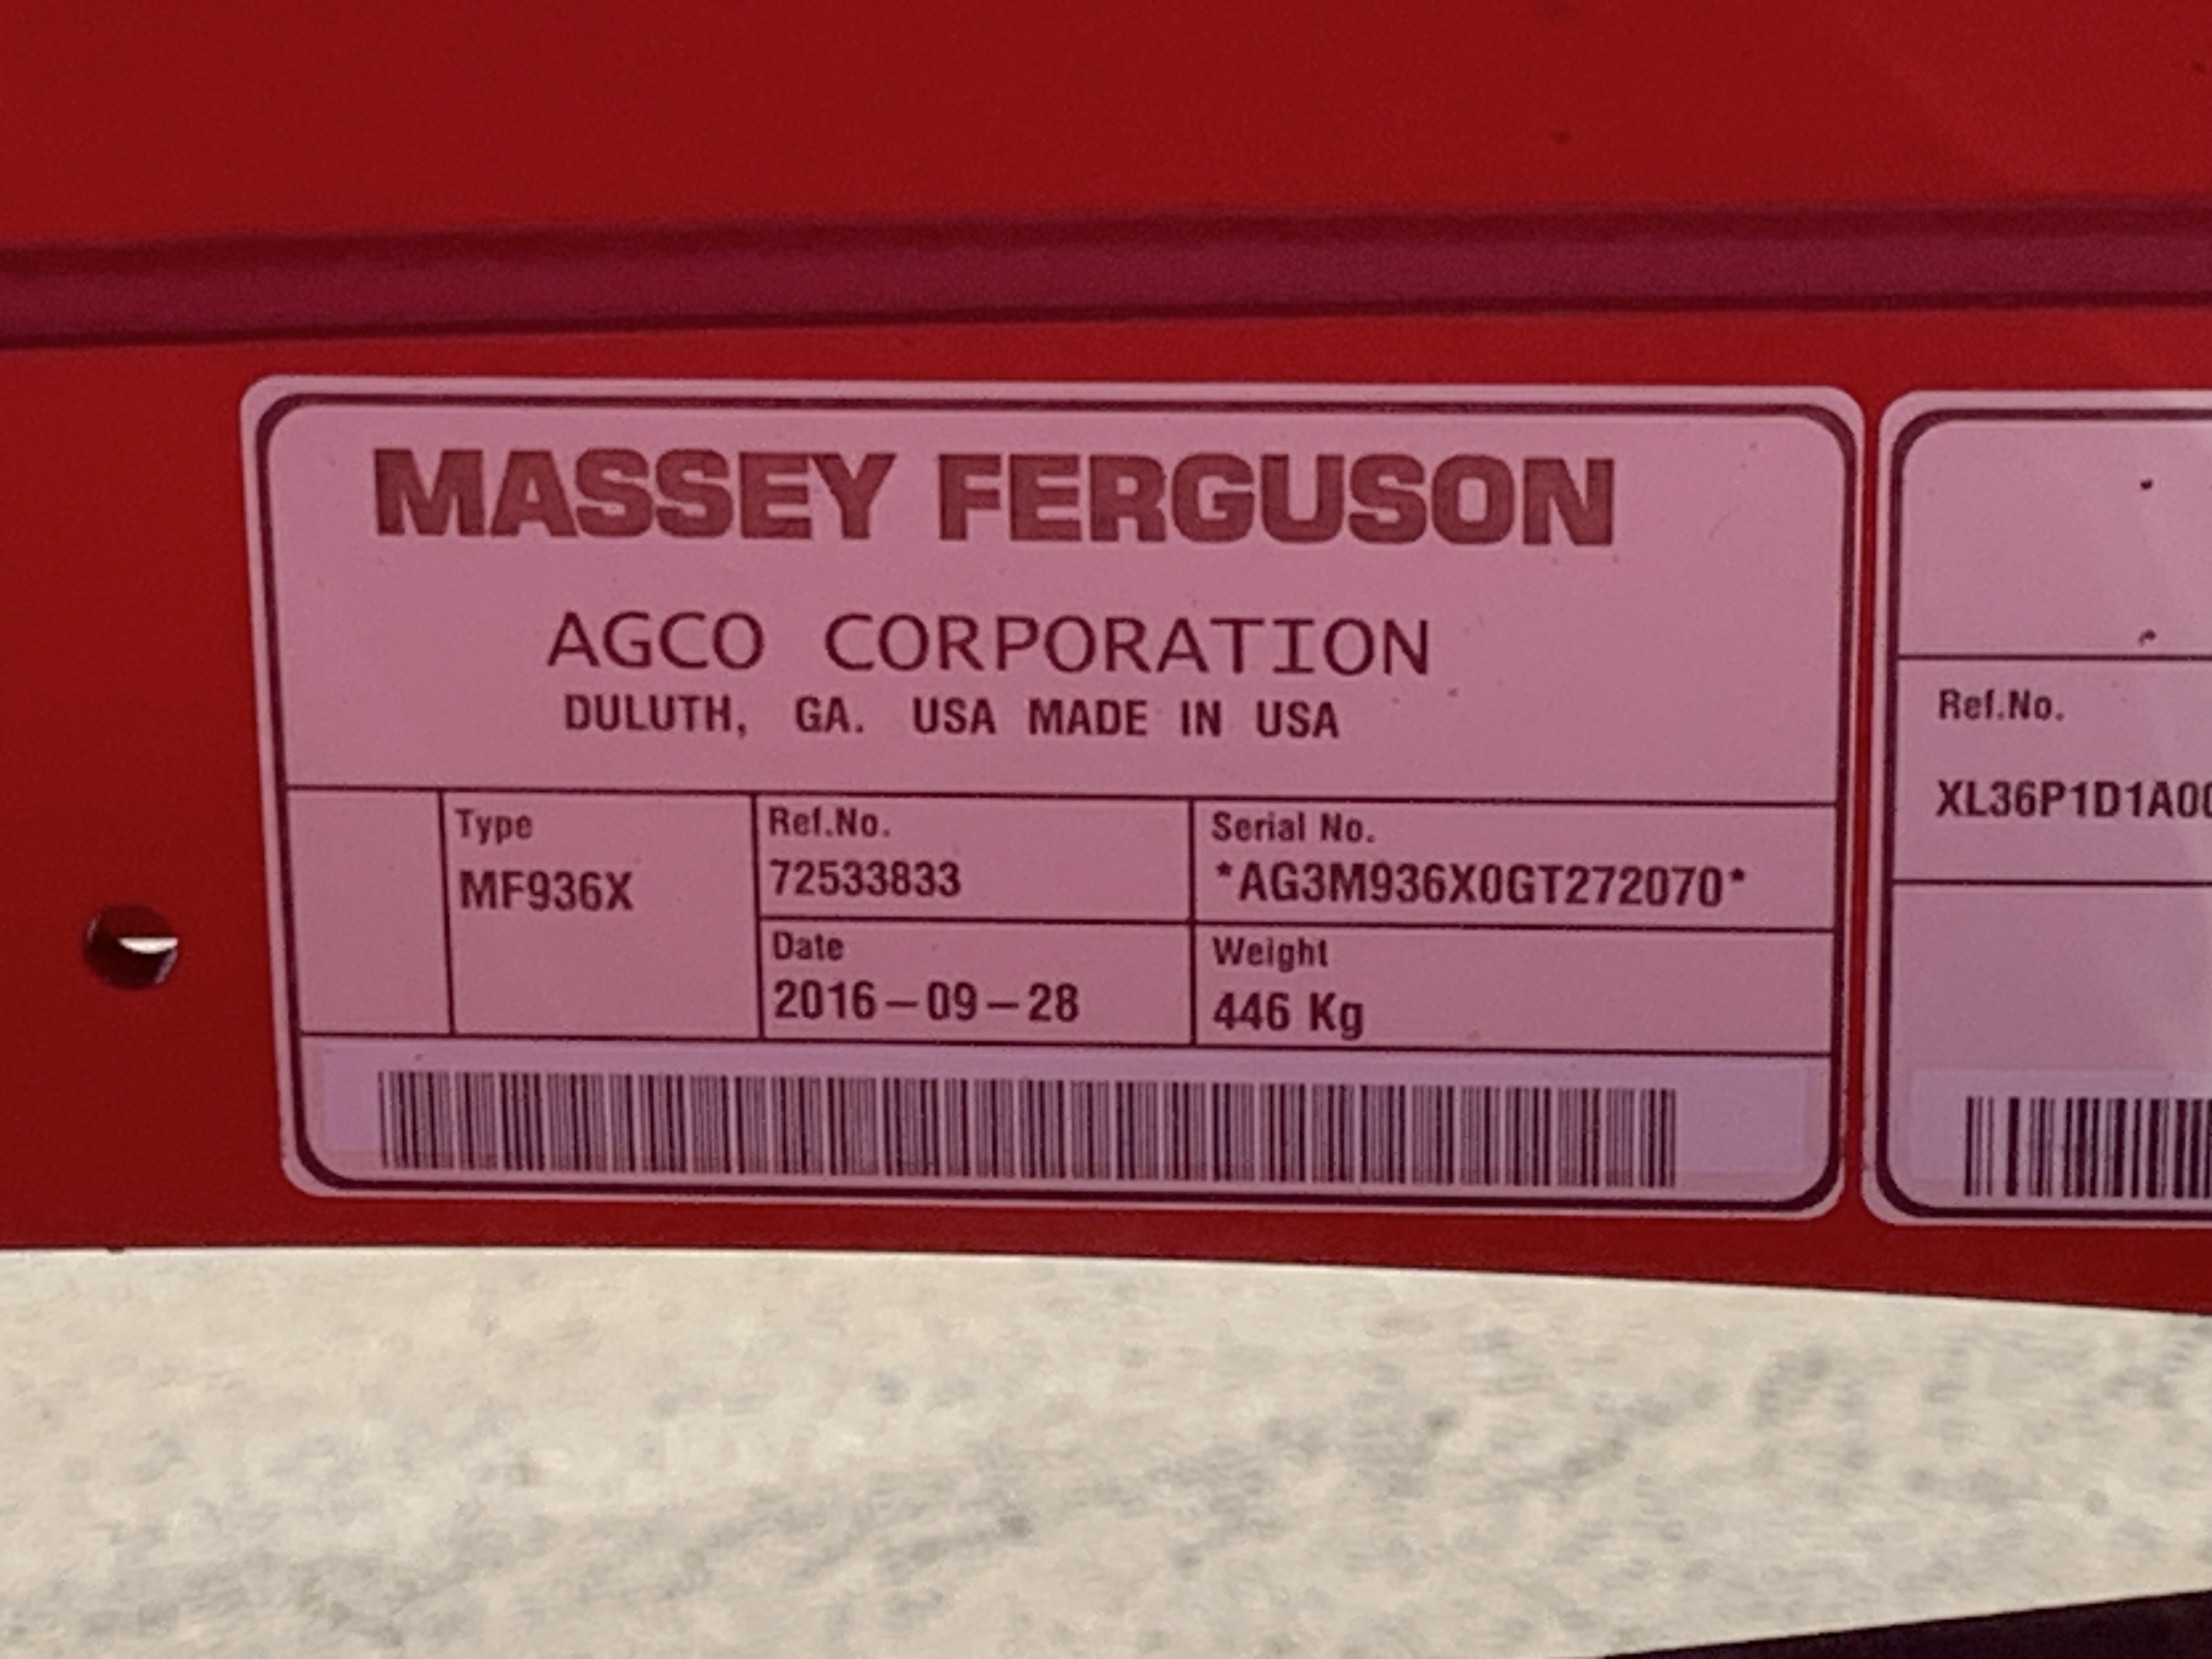 2019 Massey Ferguson 4709 Tractor